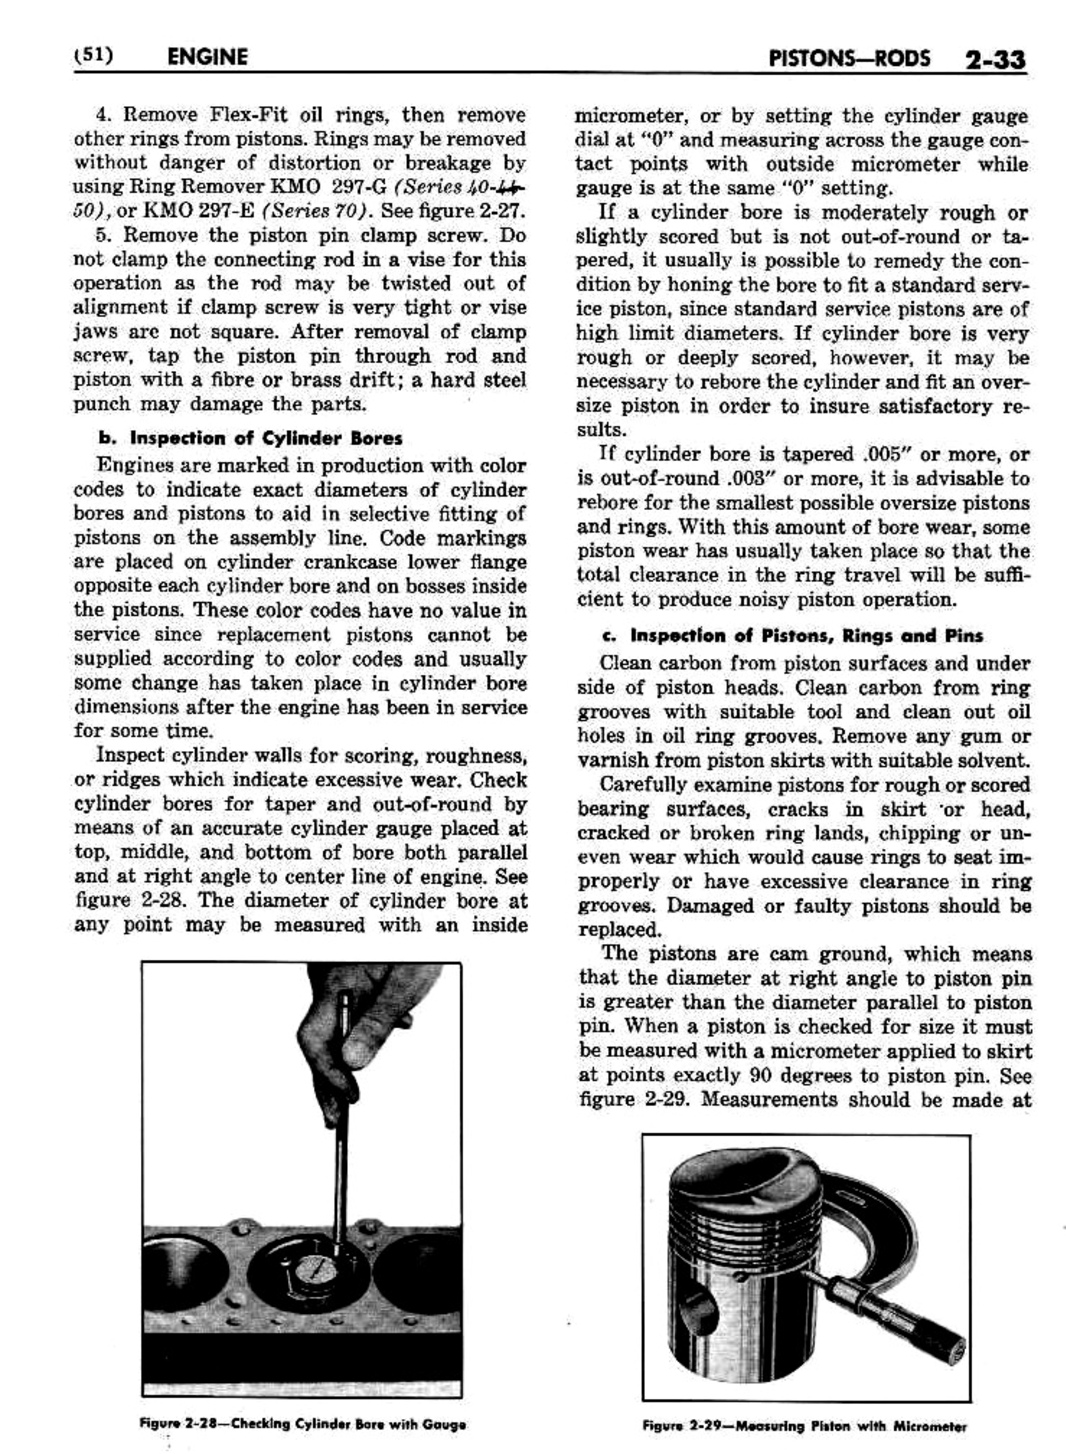 n_03 1951 Buick Shop Manual - Engine-033-033.jpg